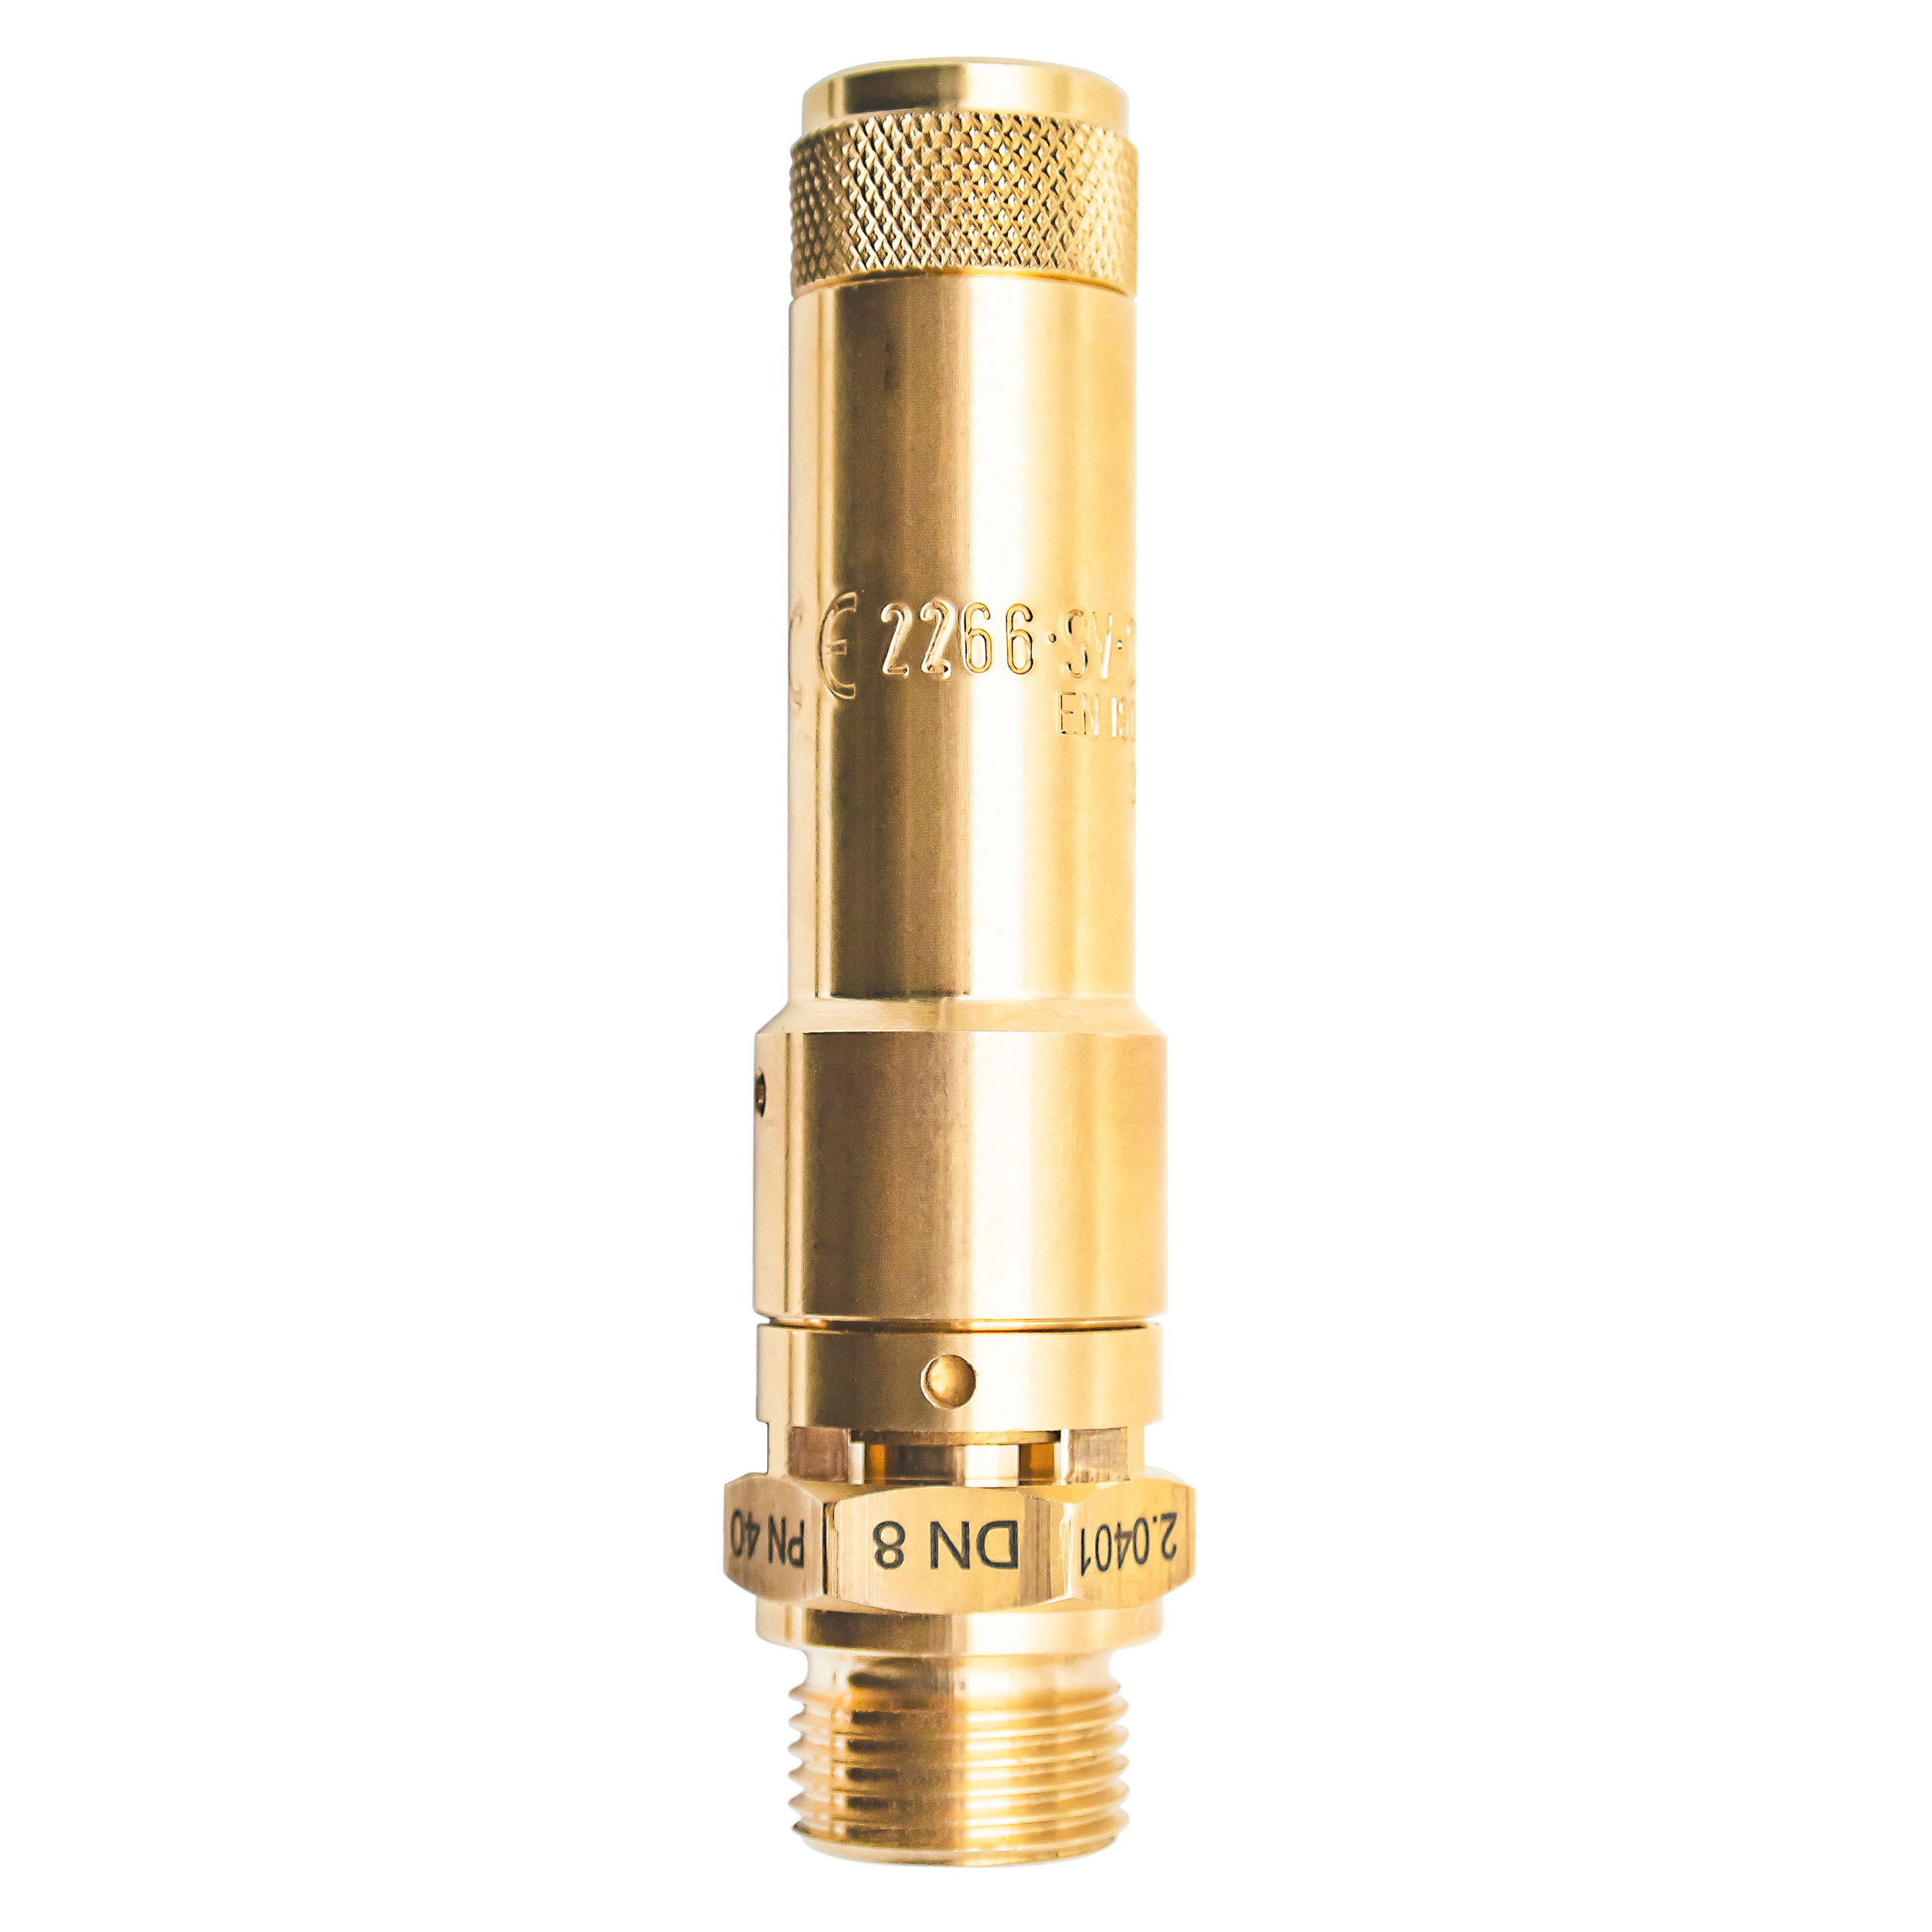 Savety valve component tested DN 8, G⅜, set pressure: 7.5 bar (108,75 psi)